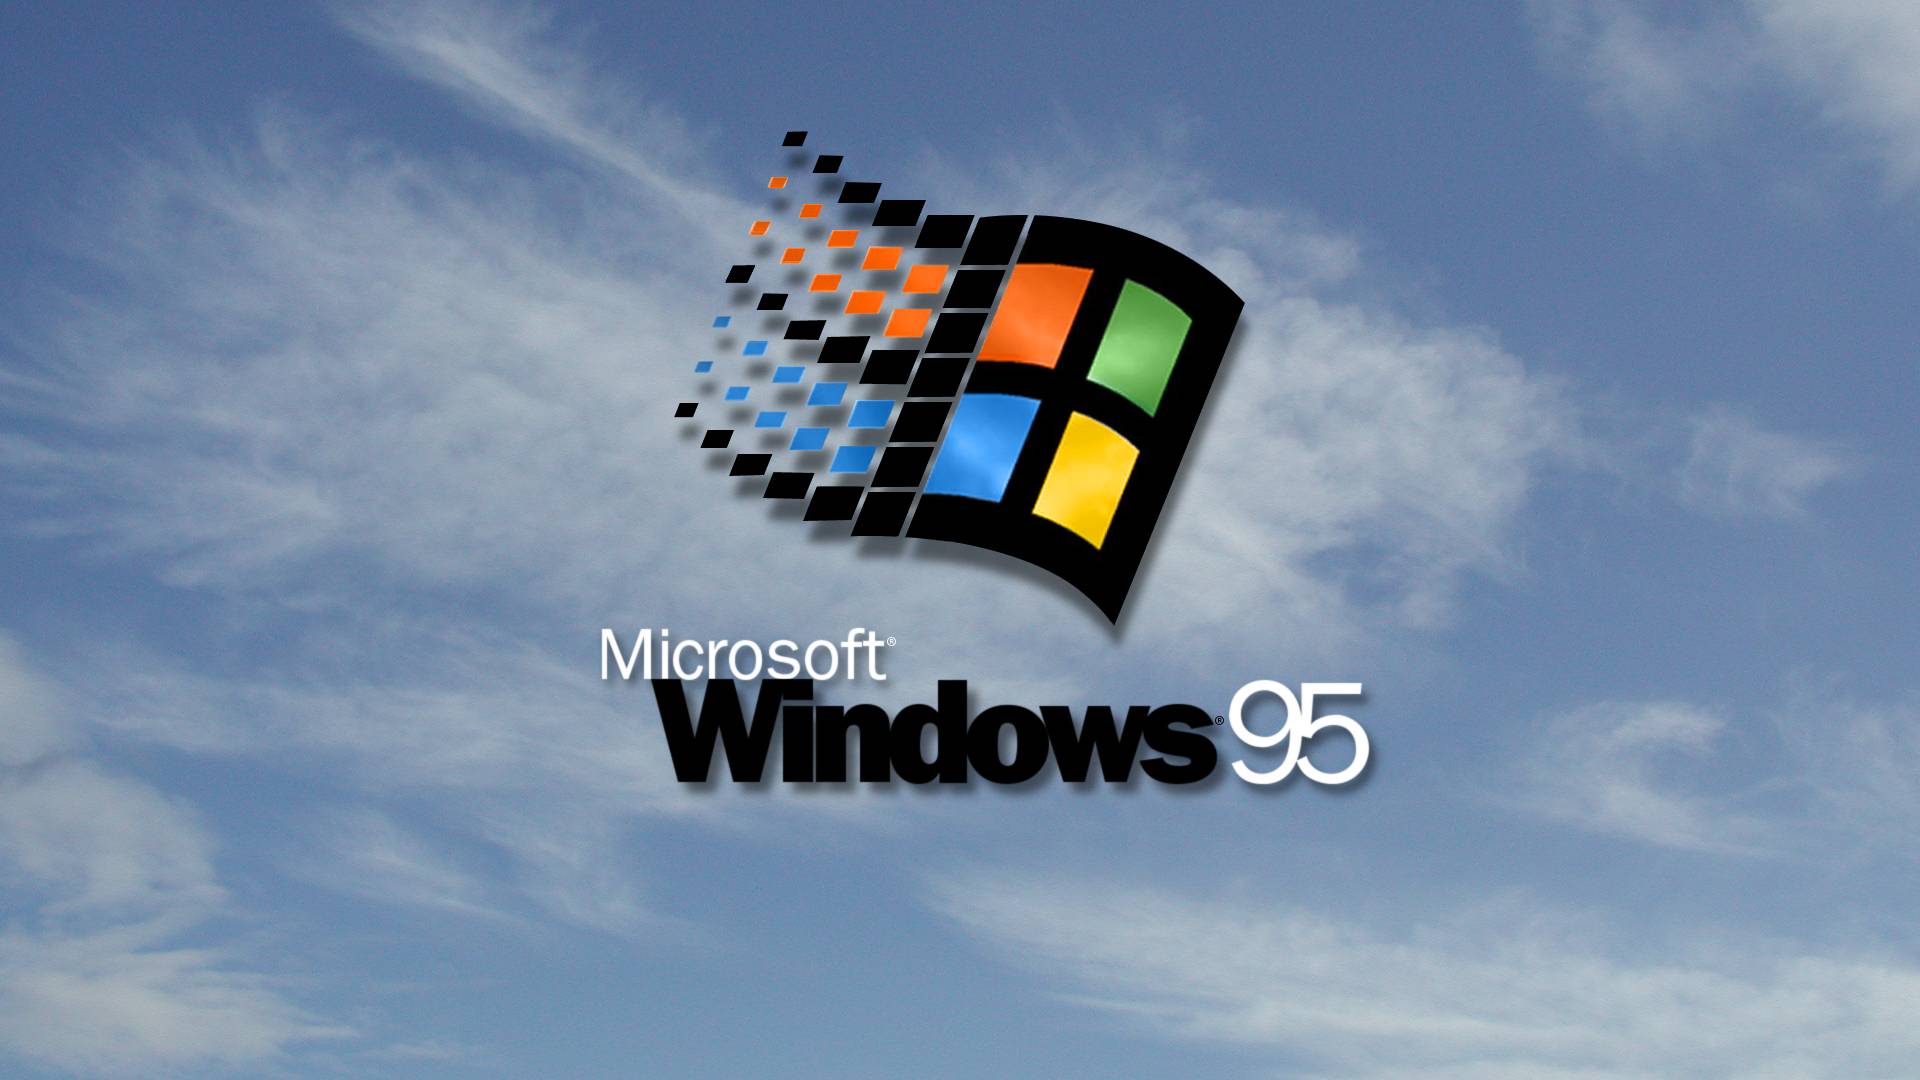 sfondo di windows 95,cielo,cubo di rubik,font,grafica,paracadute